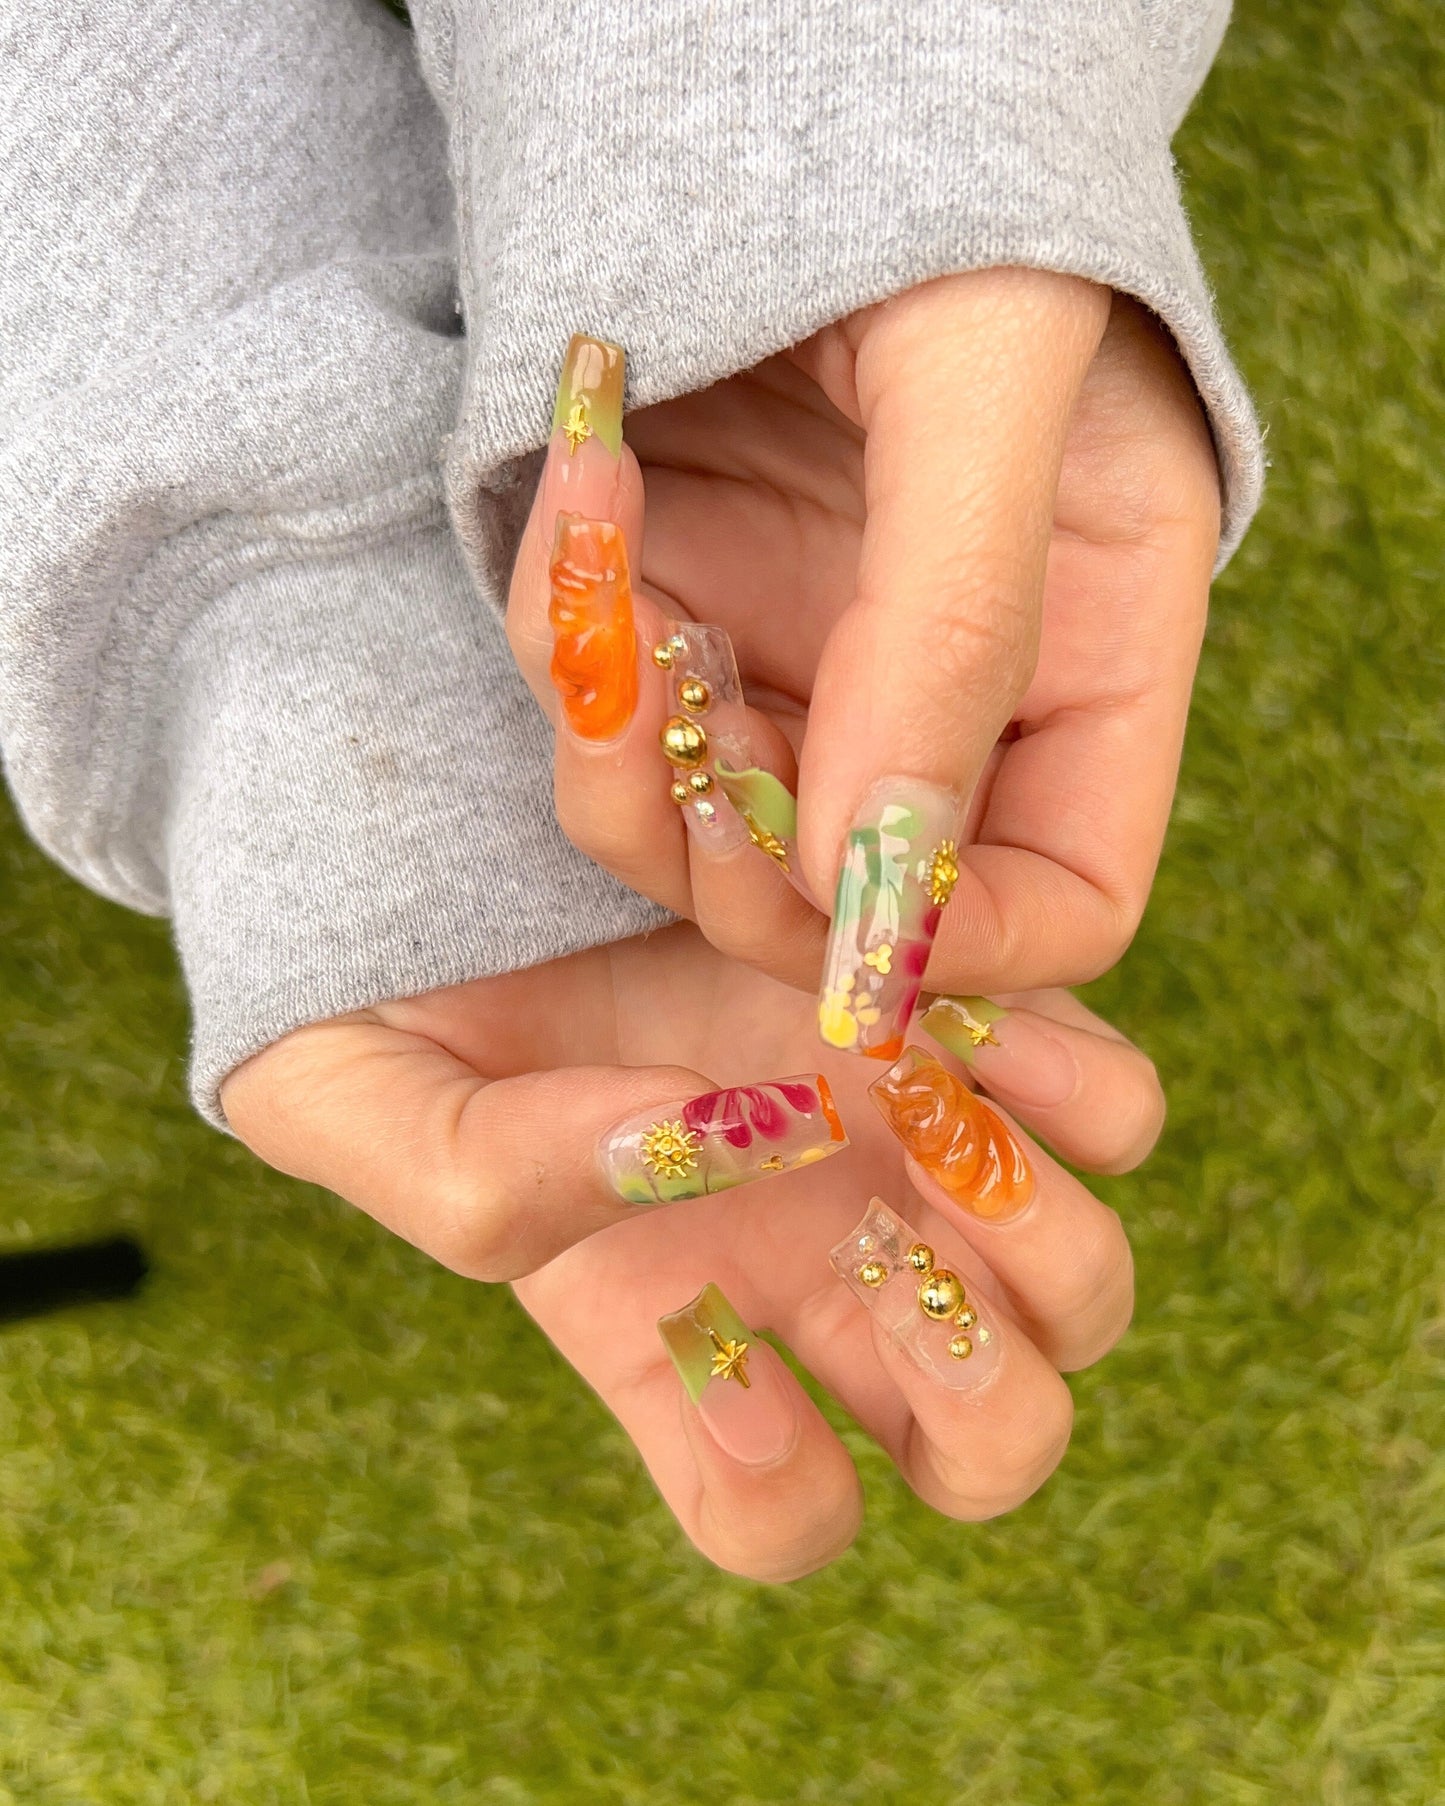 Blossom nails